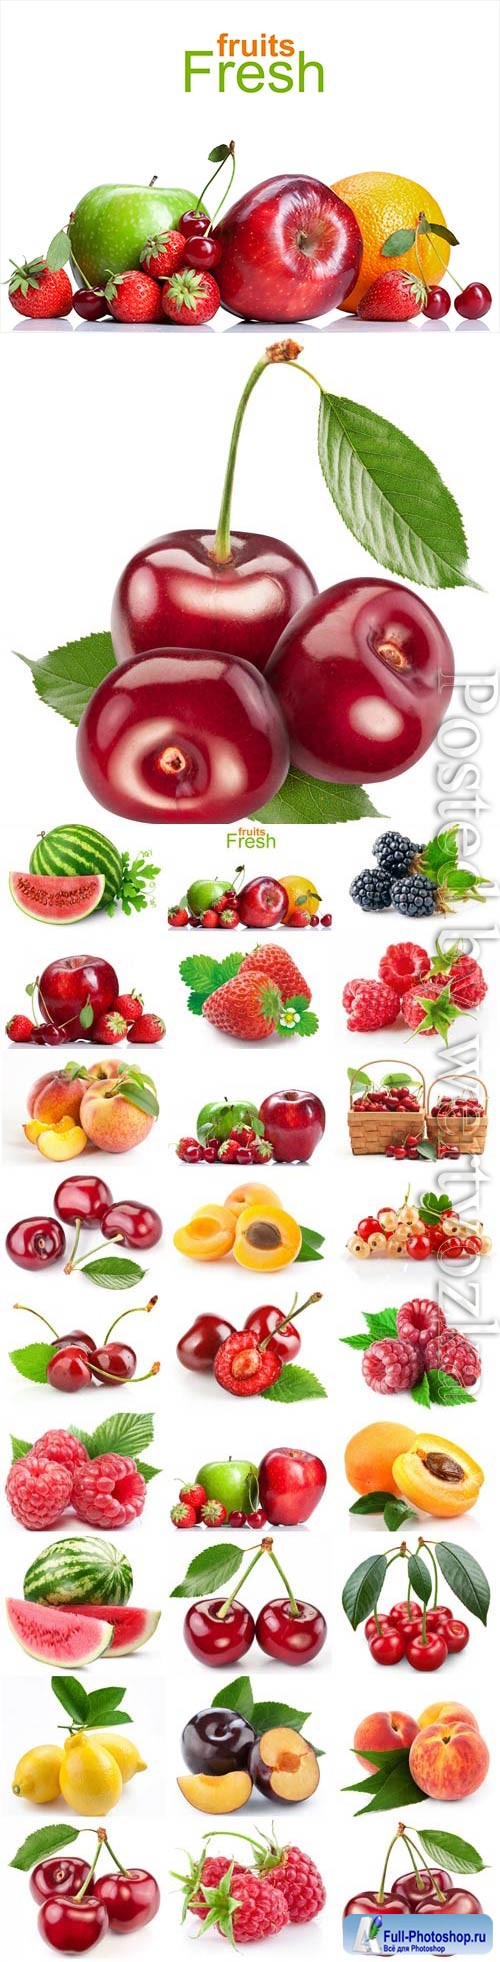 Fresh fruits and berries stock photo